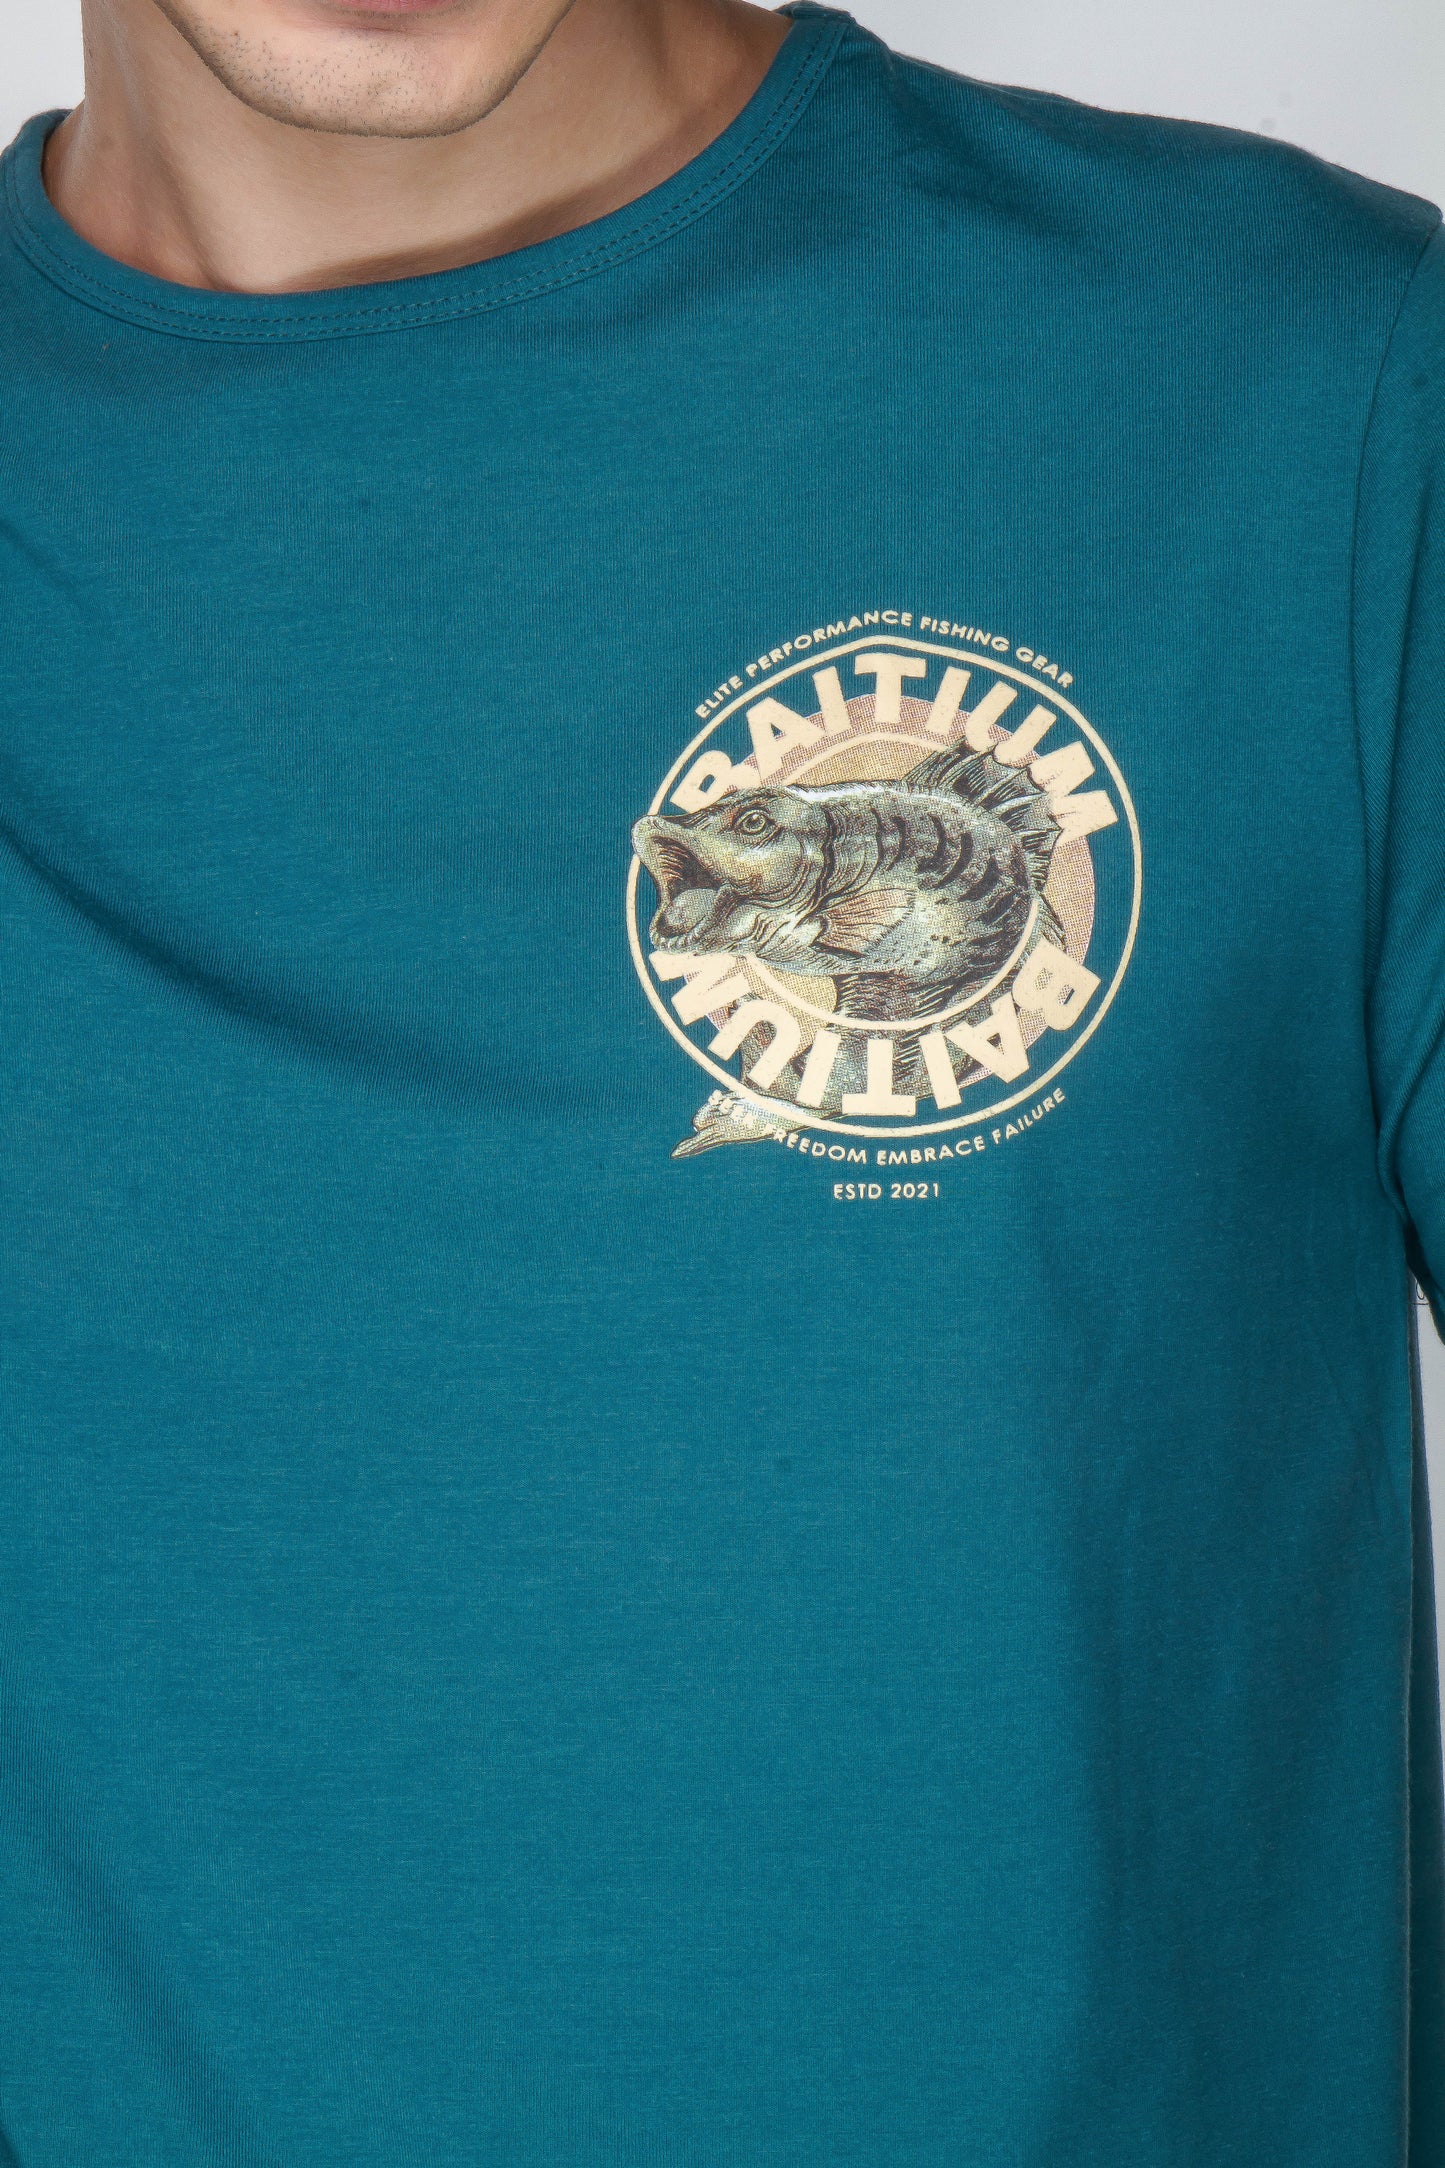 Freshwater Series - Performance Fishing T-Shirt